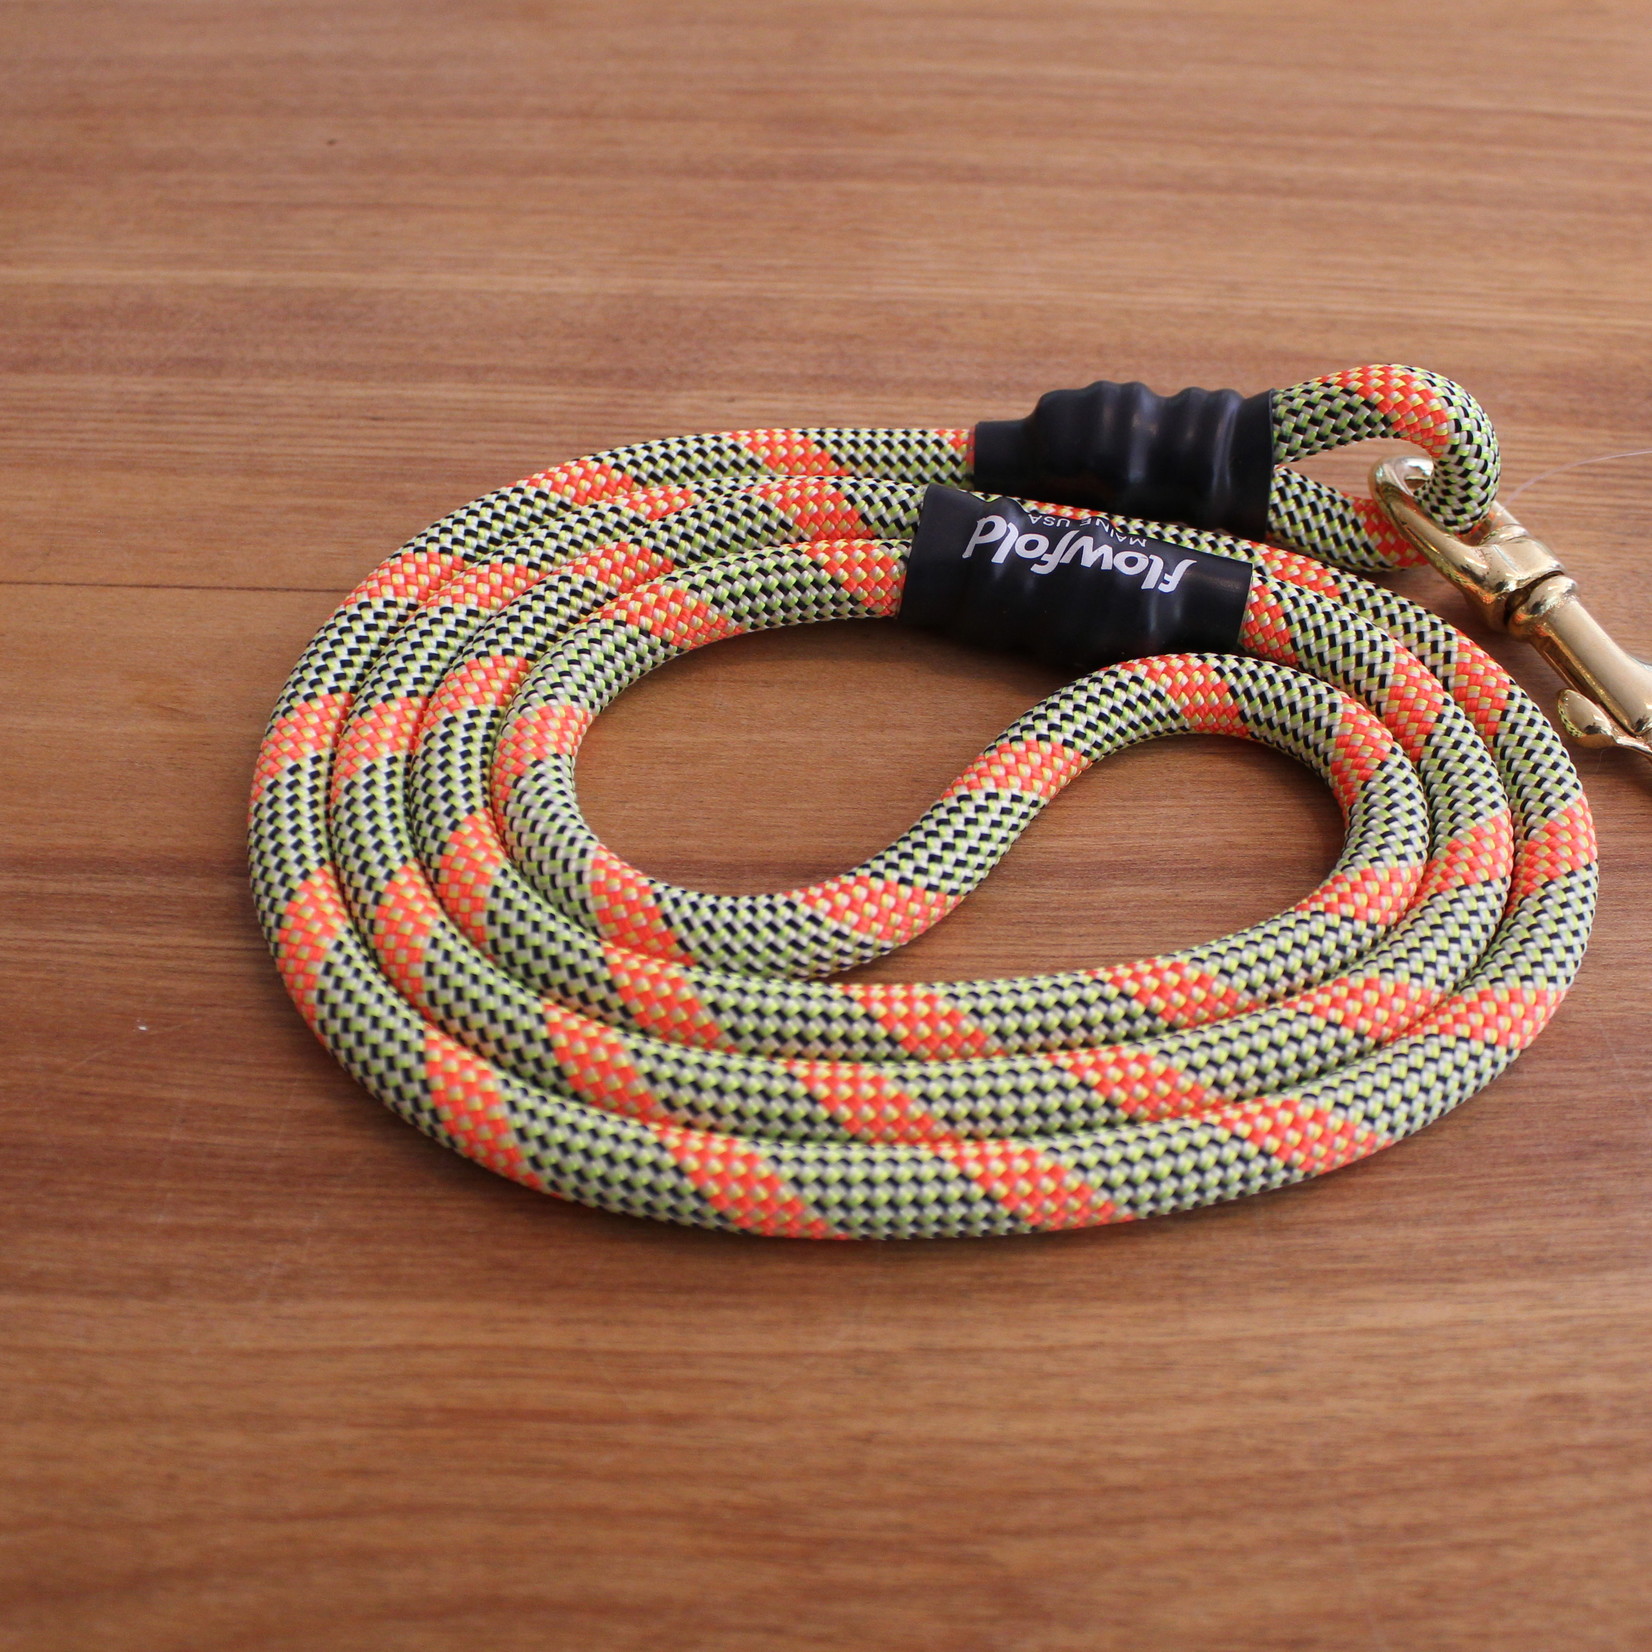 Flowfold dog leash (4 ft)